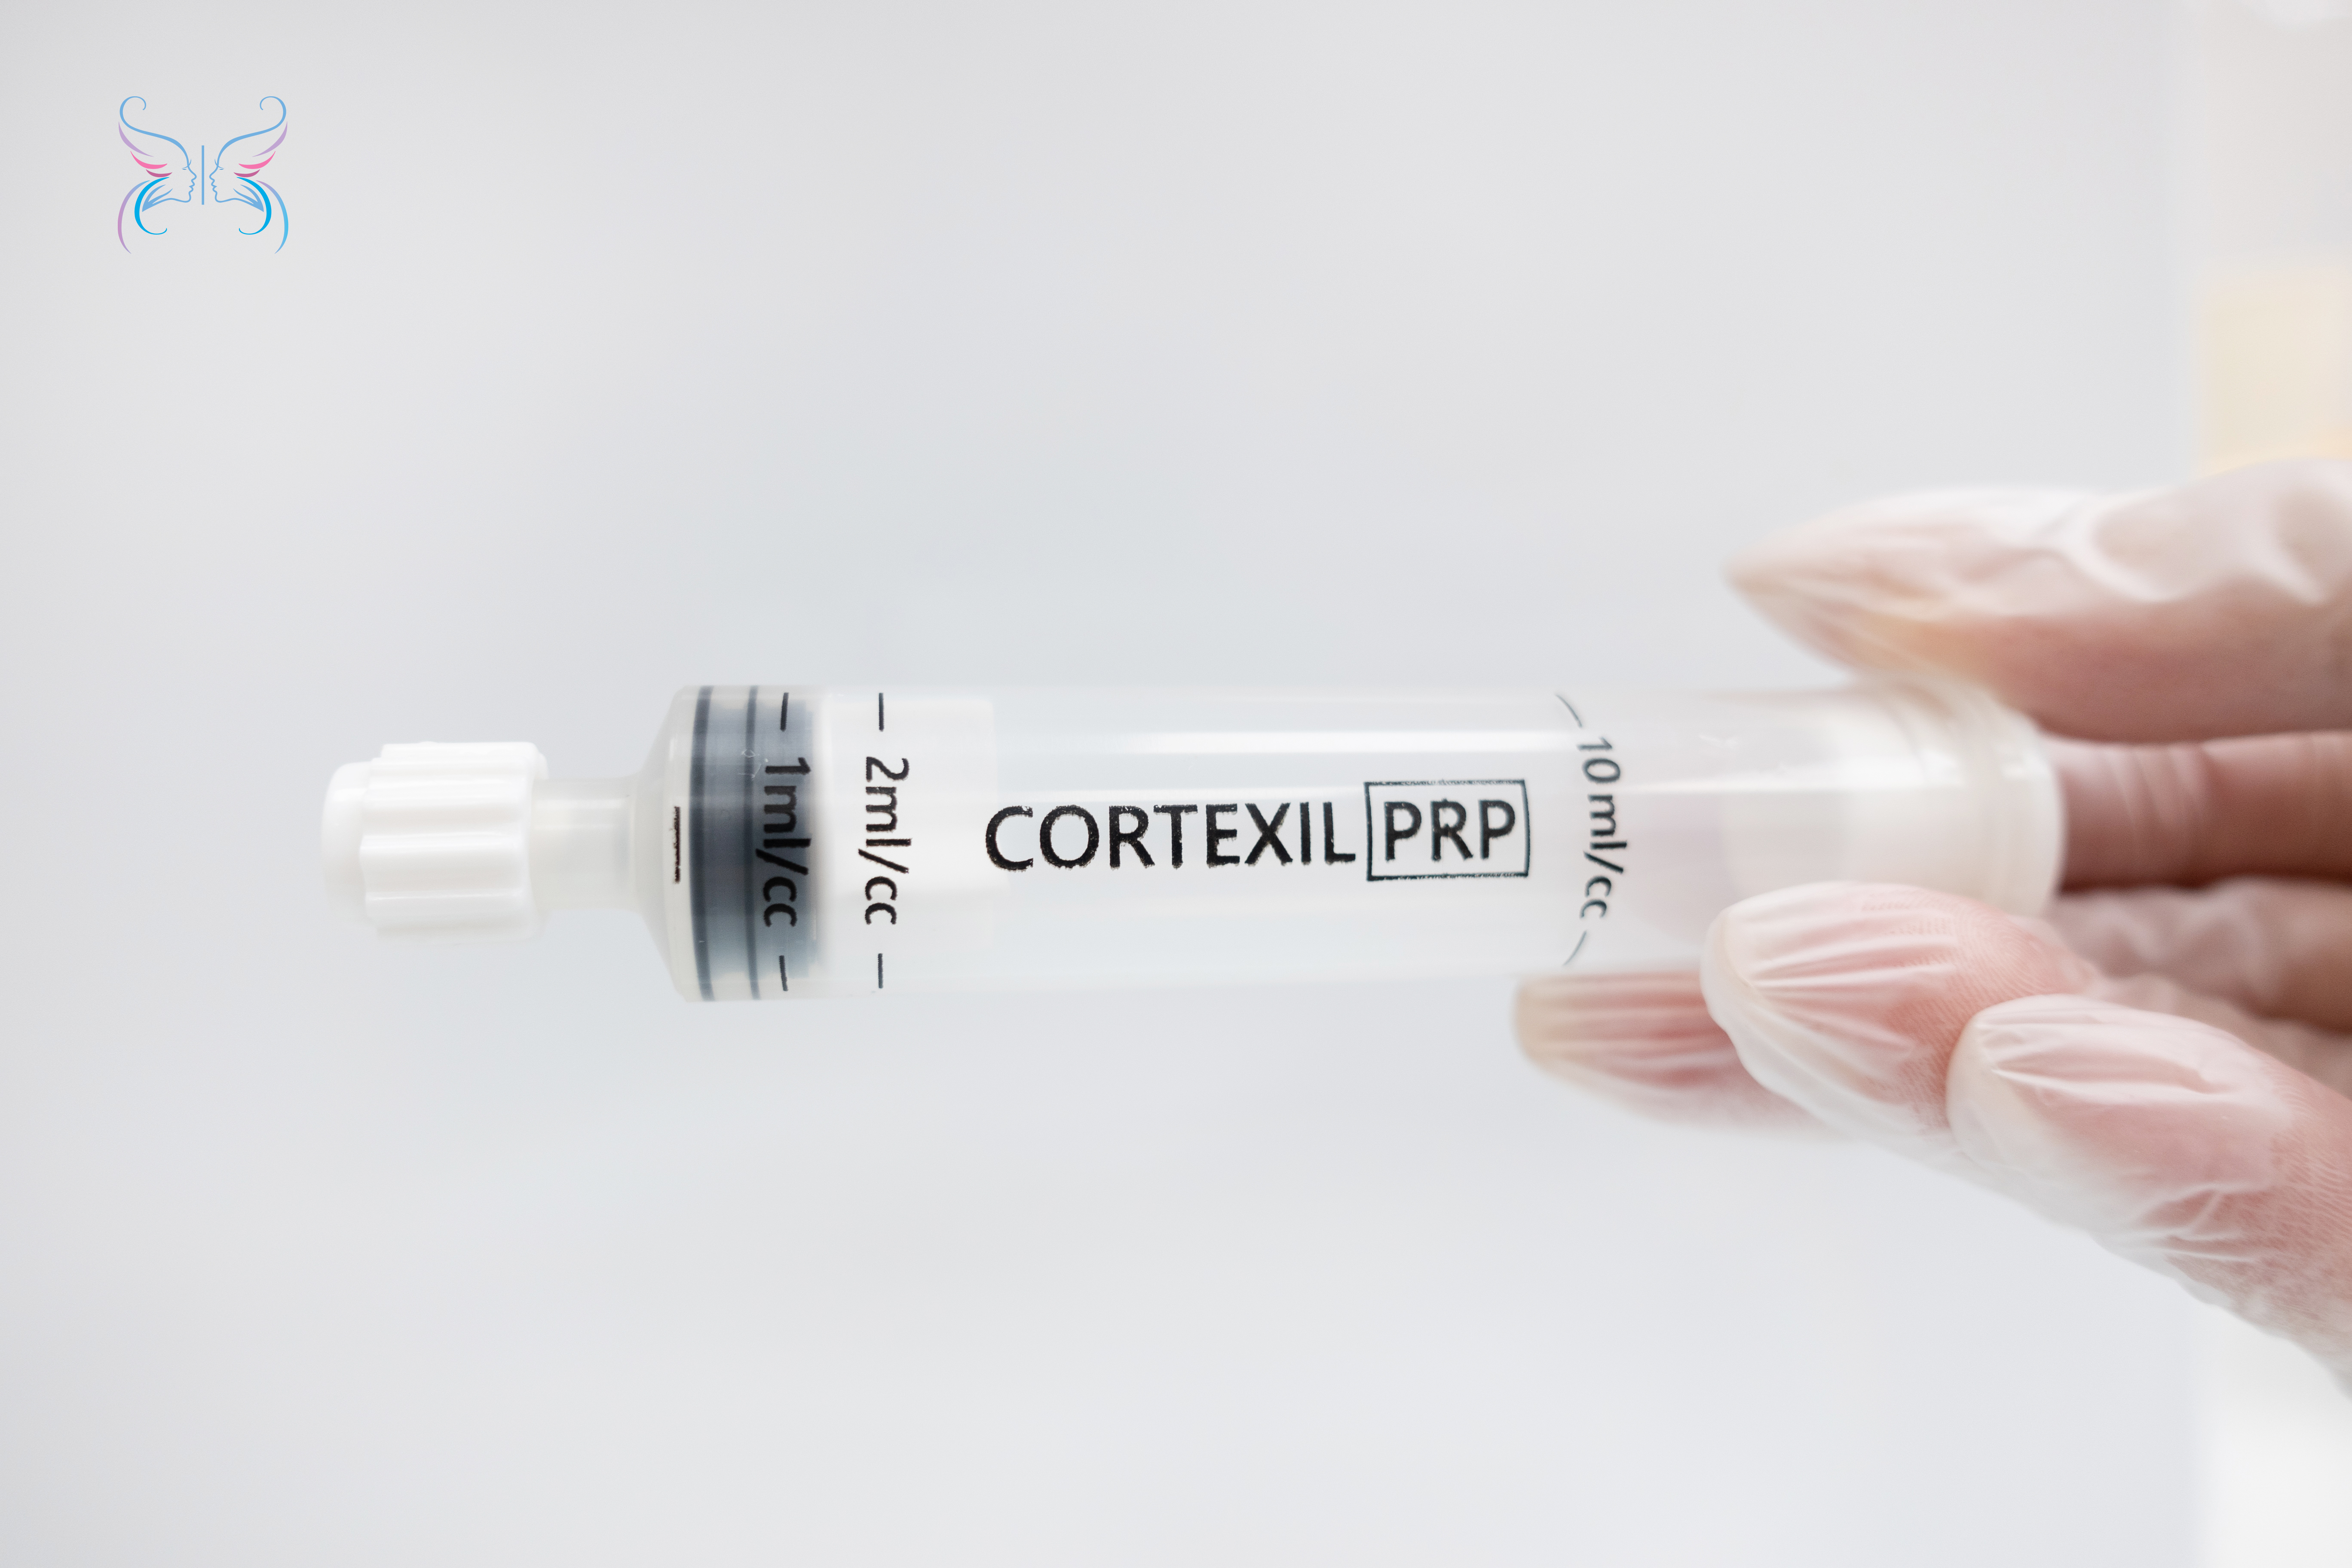 Cortexil PRP